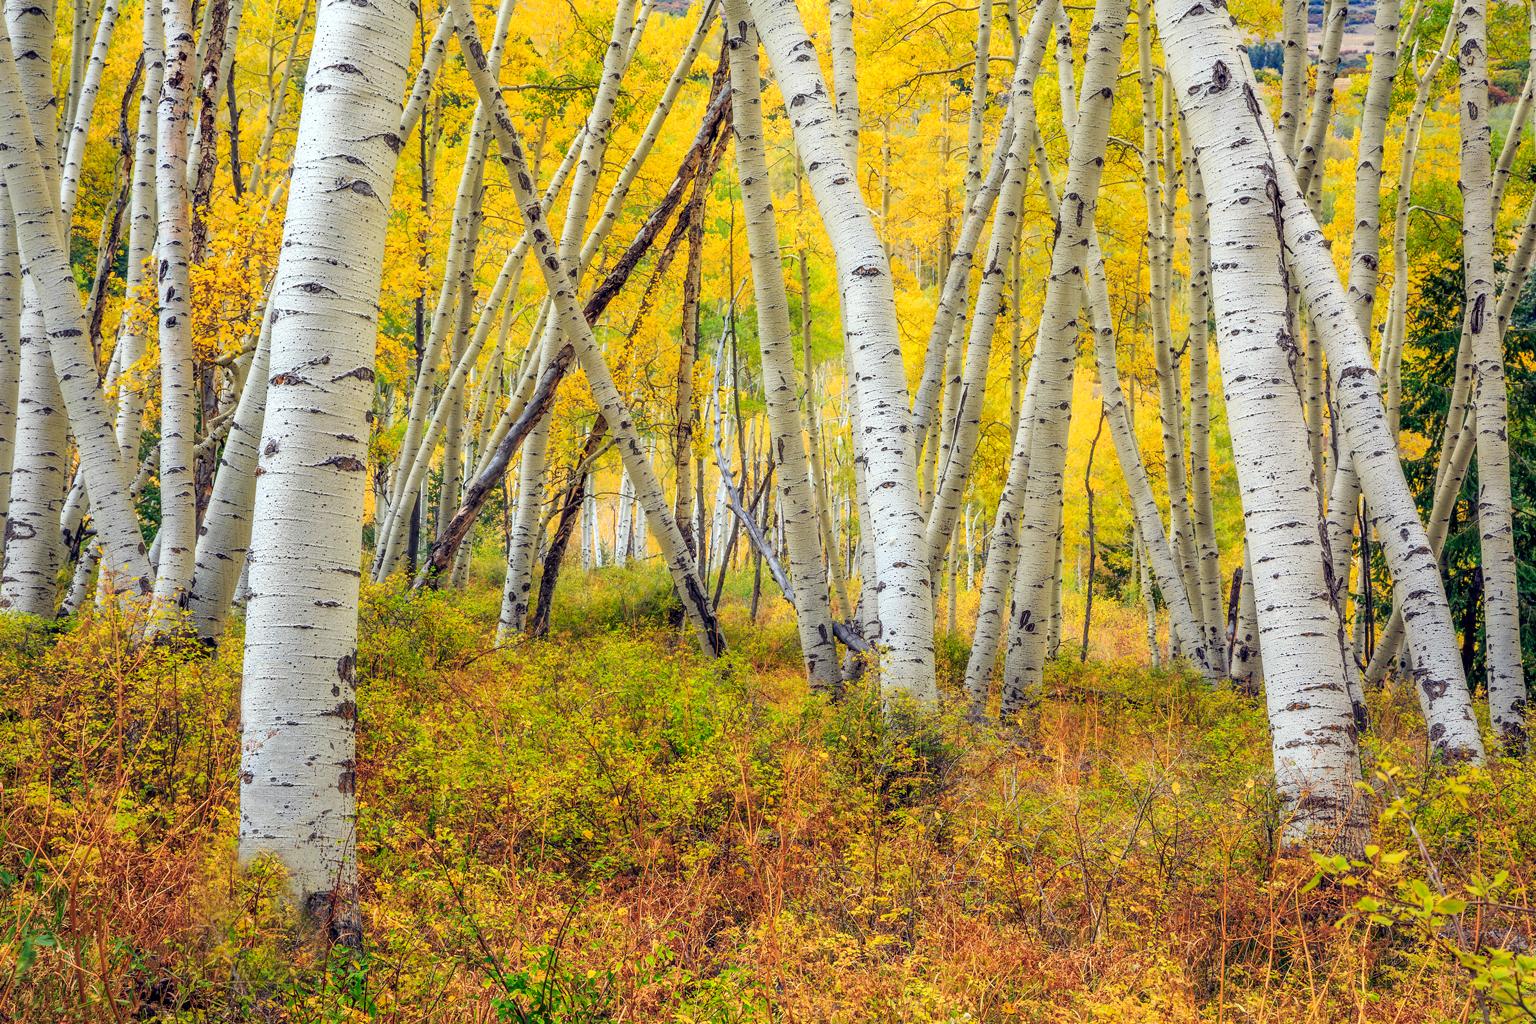 "Aspens", Color Nature Photography, Landscape, Trees, Autumn, Yellow